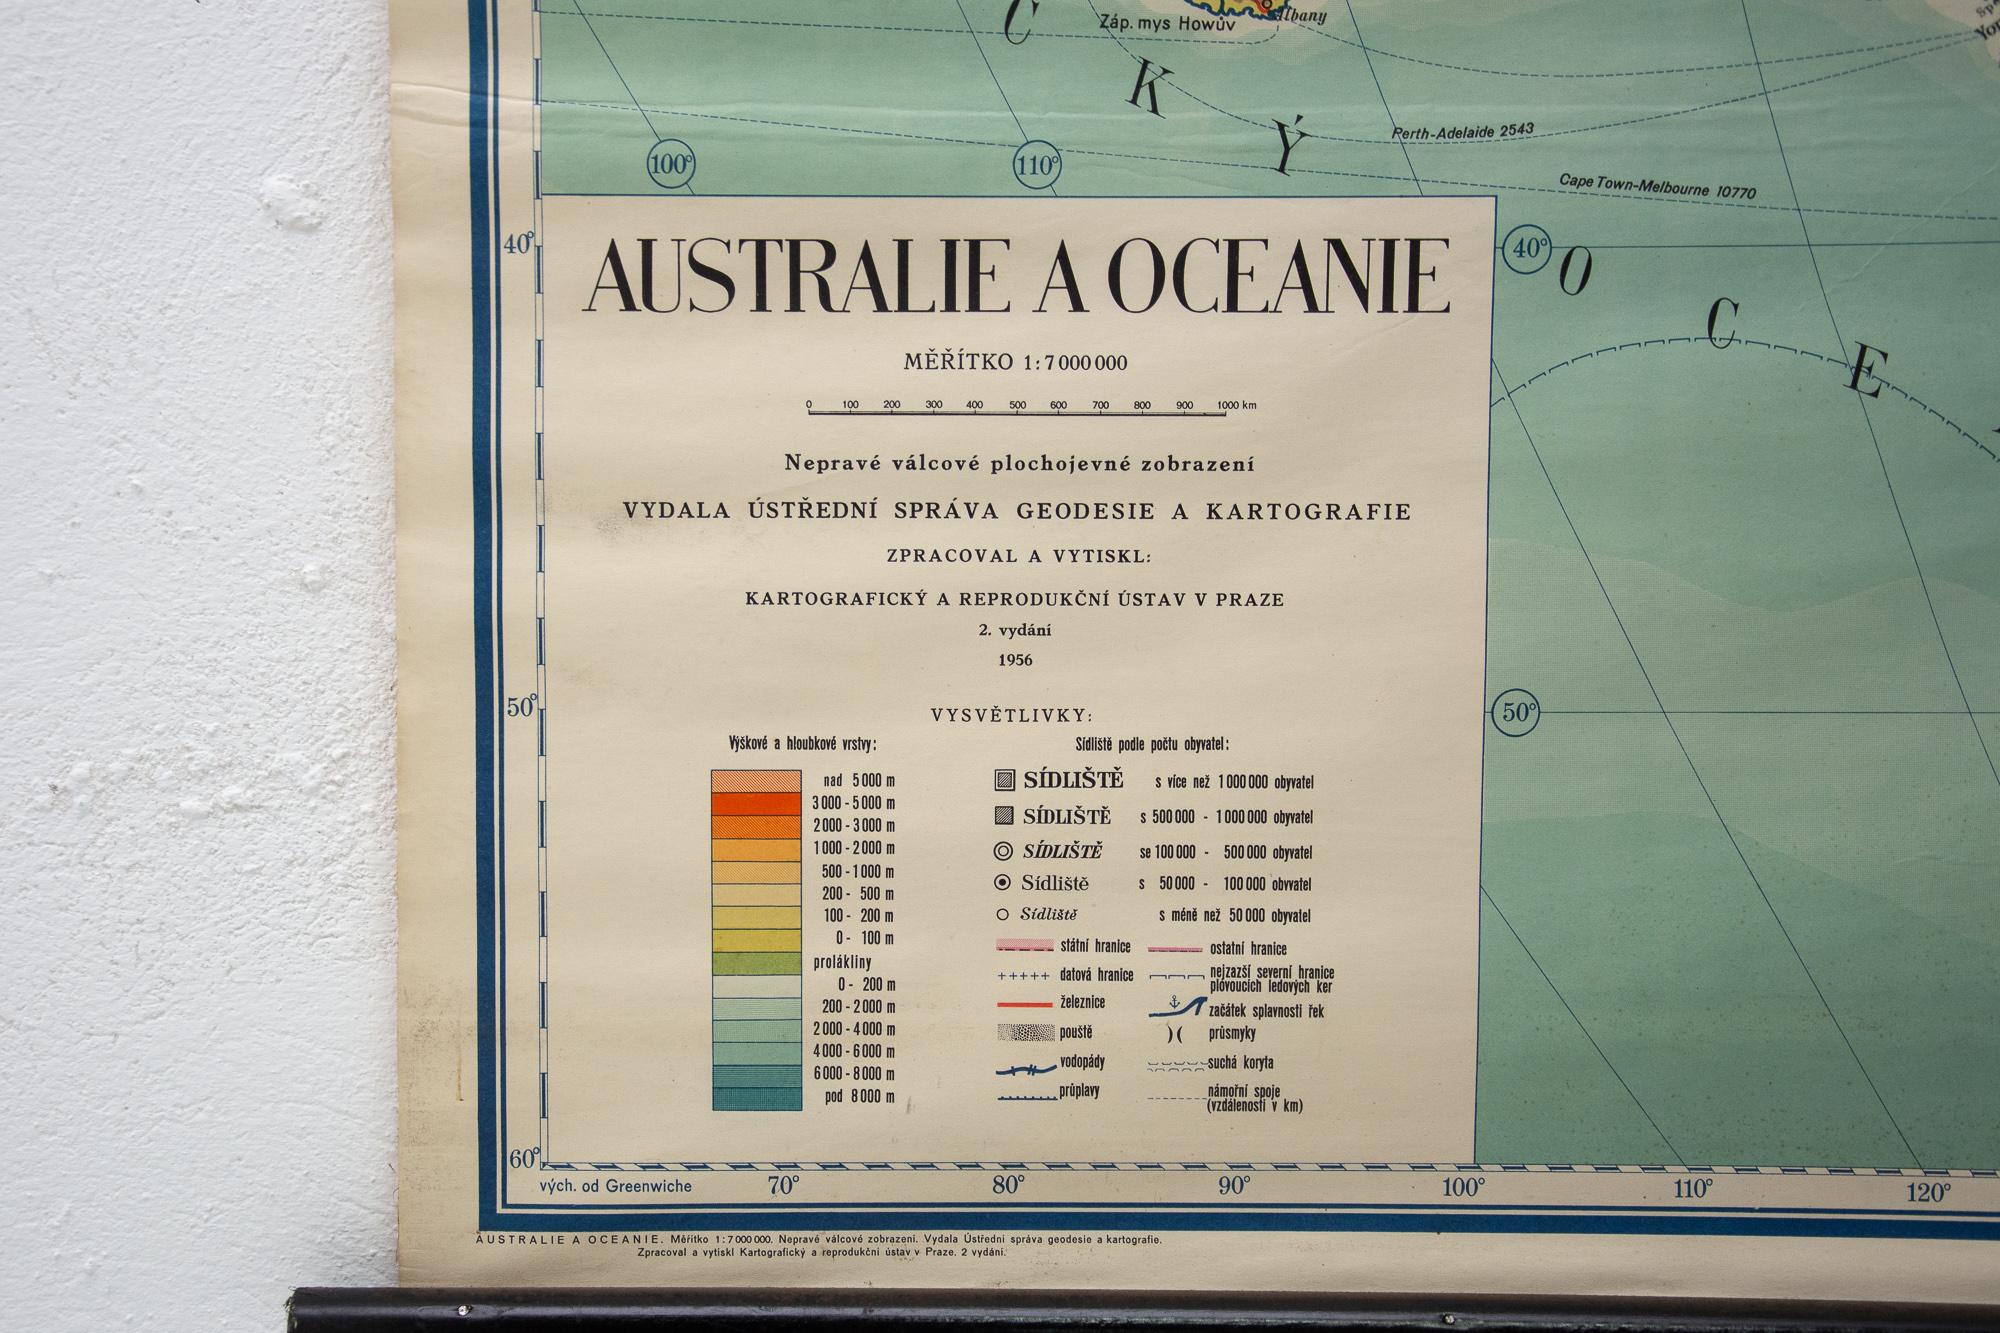 Paper Czechoslovak Vintage School Maps of Australia and Oceania, 1955